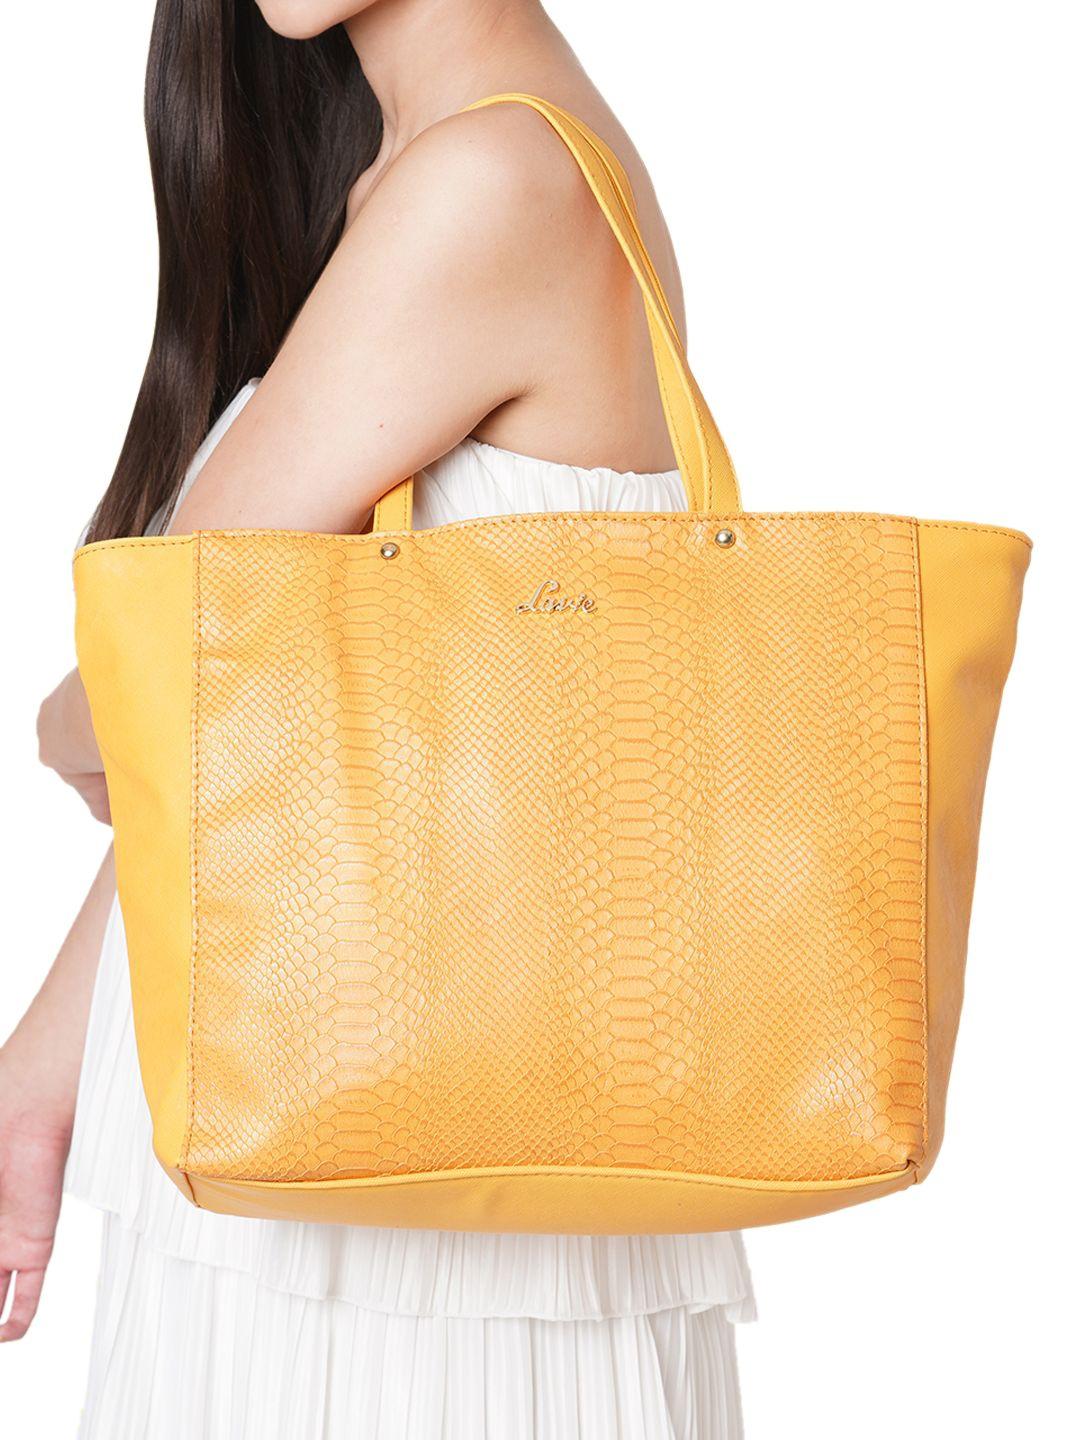 lavie croc nov women yellow tote bag